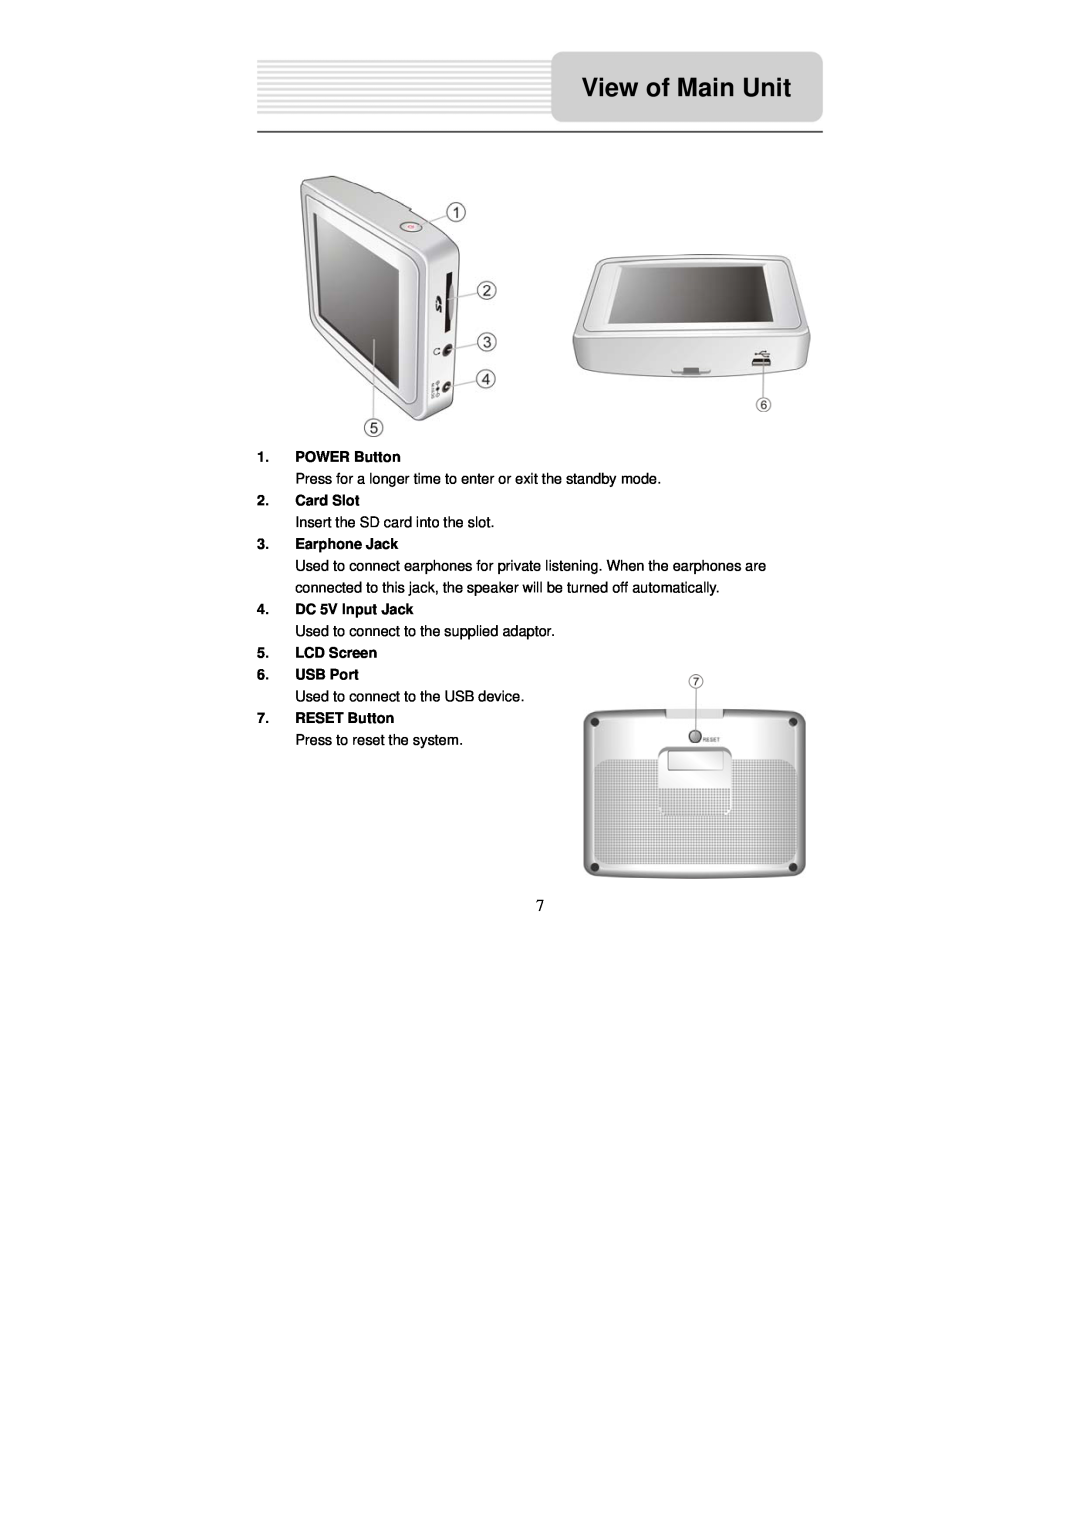 Nextar X3-09 View of Main Unit, POWER Button, Card Slot, Earphone Jack, DC 5V Input Jack, LCD Screen 6. USB Port 